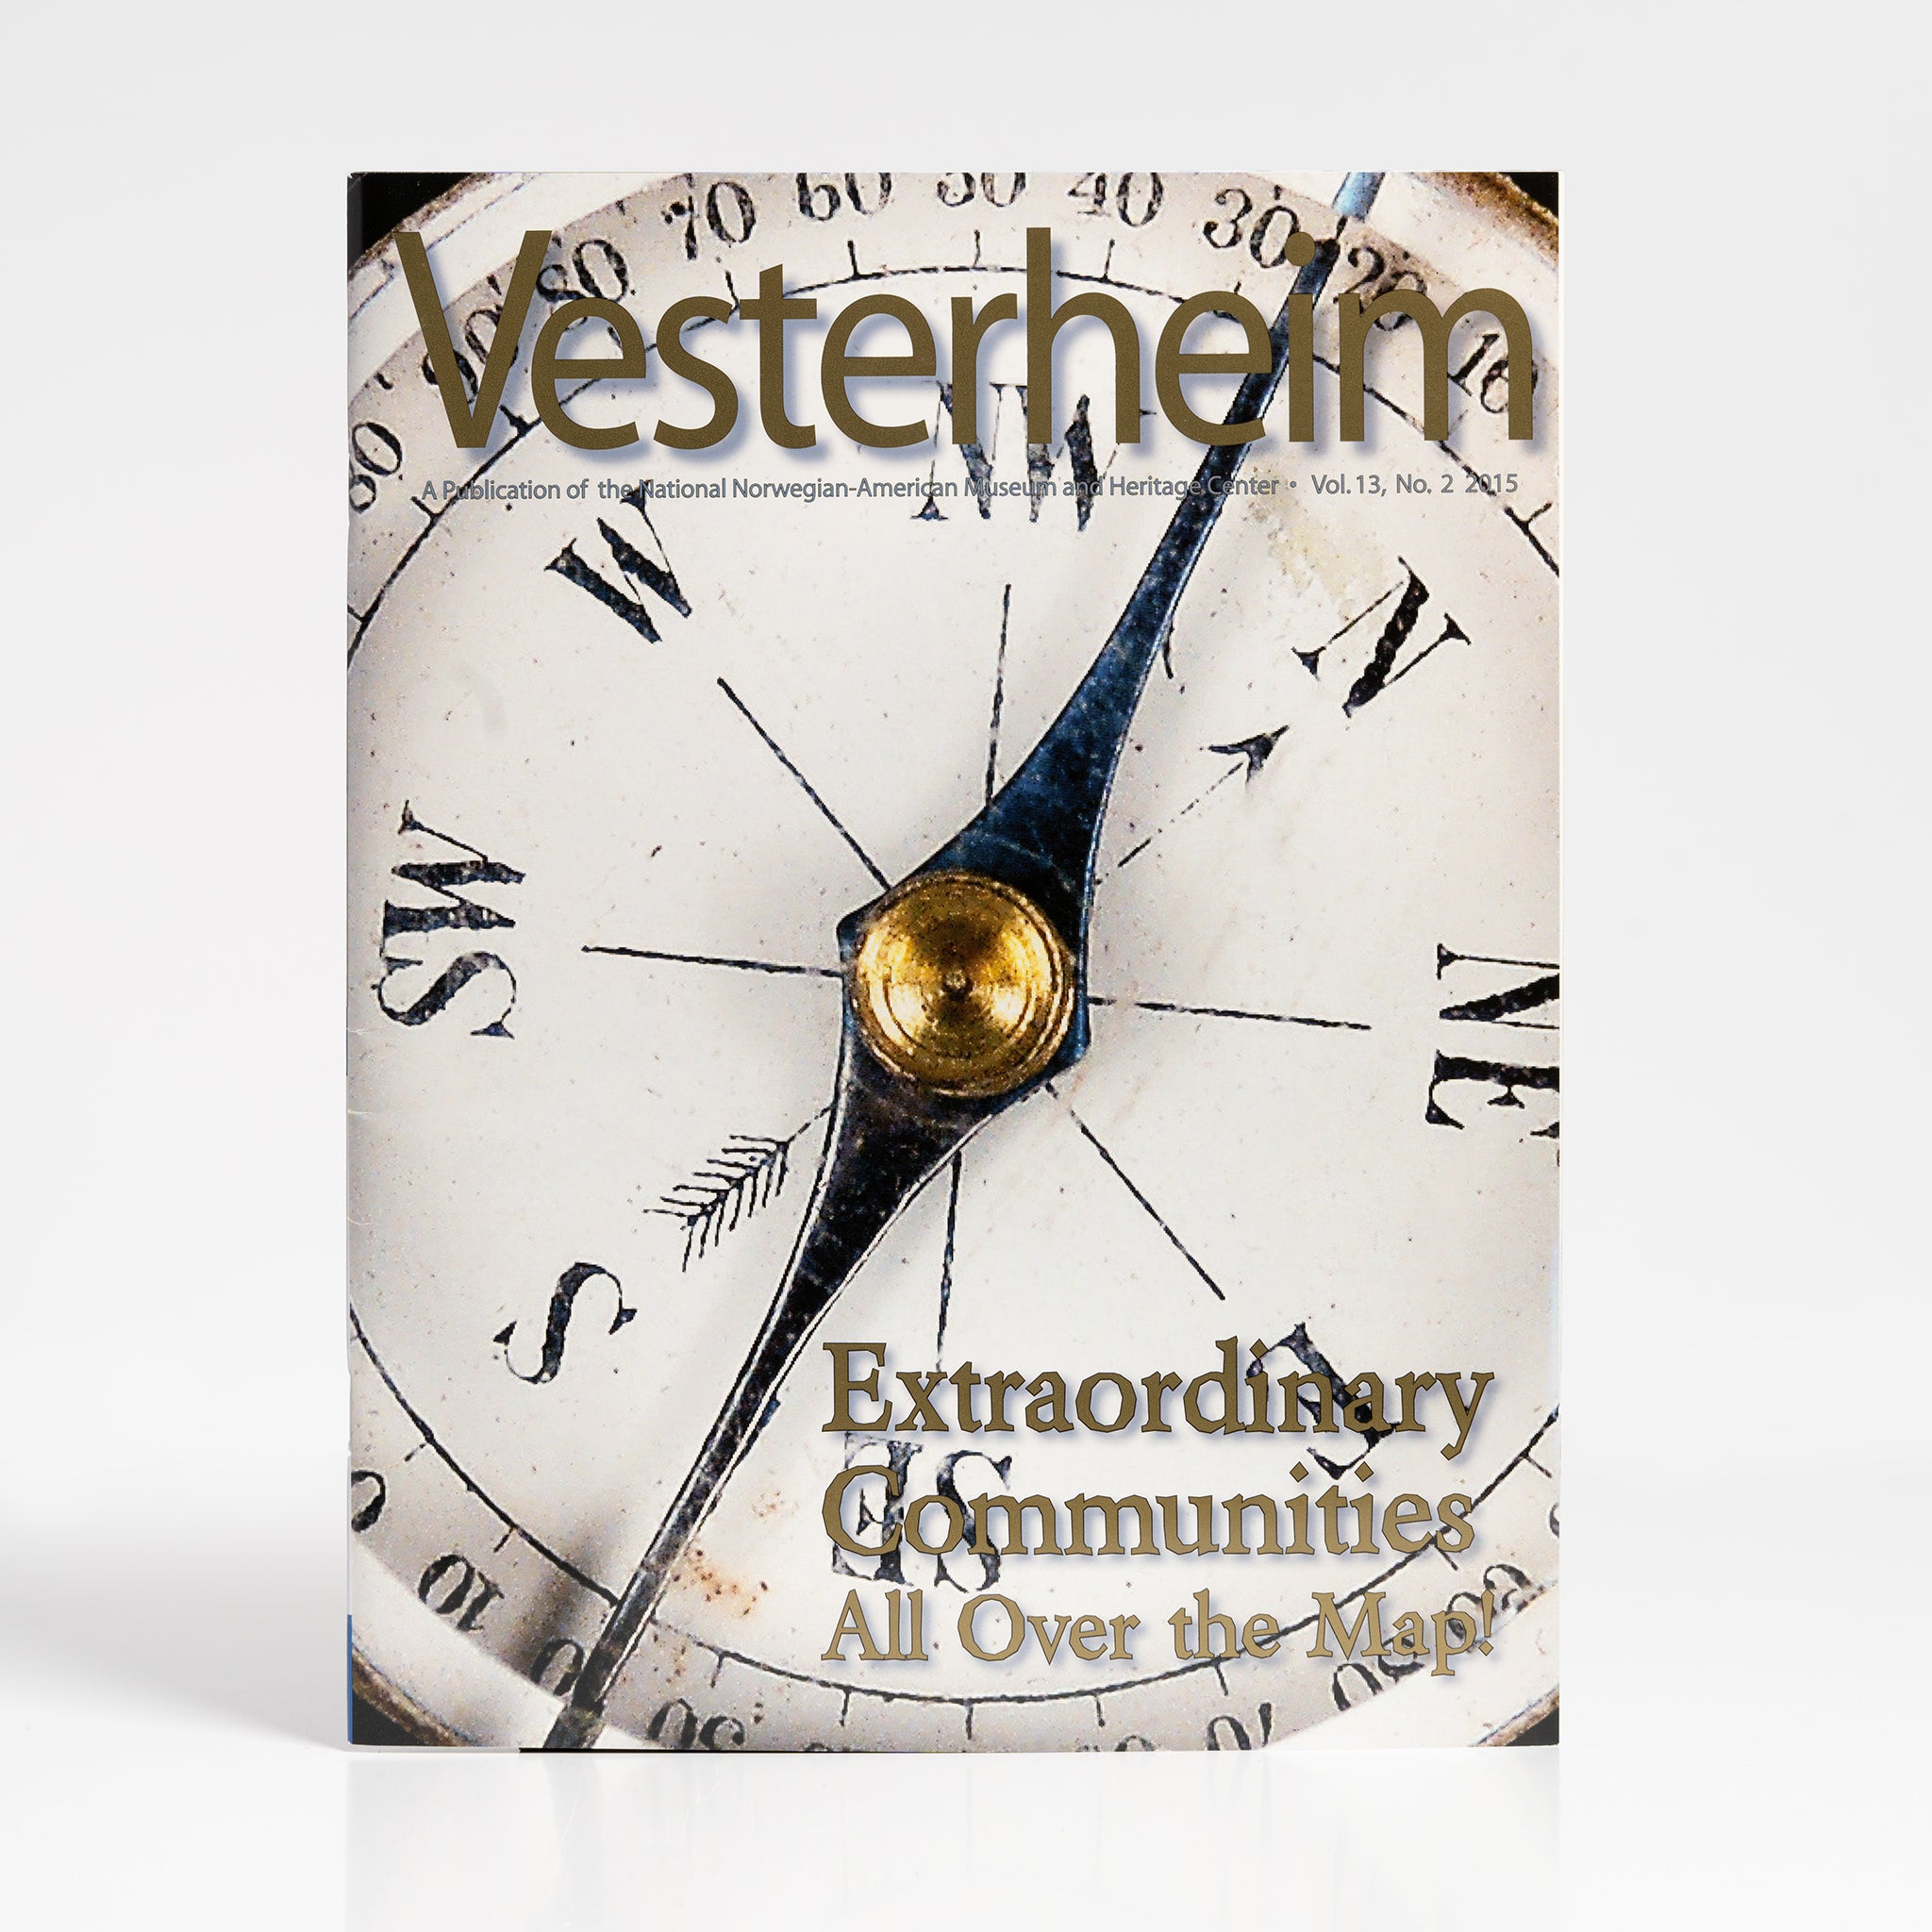 Vesterheim Magazine Vol. 13, No. 2 2015 - Extraordinary Communities All Over the Map!